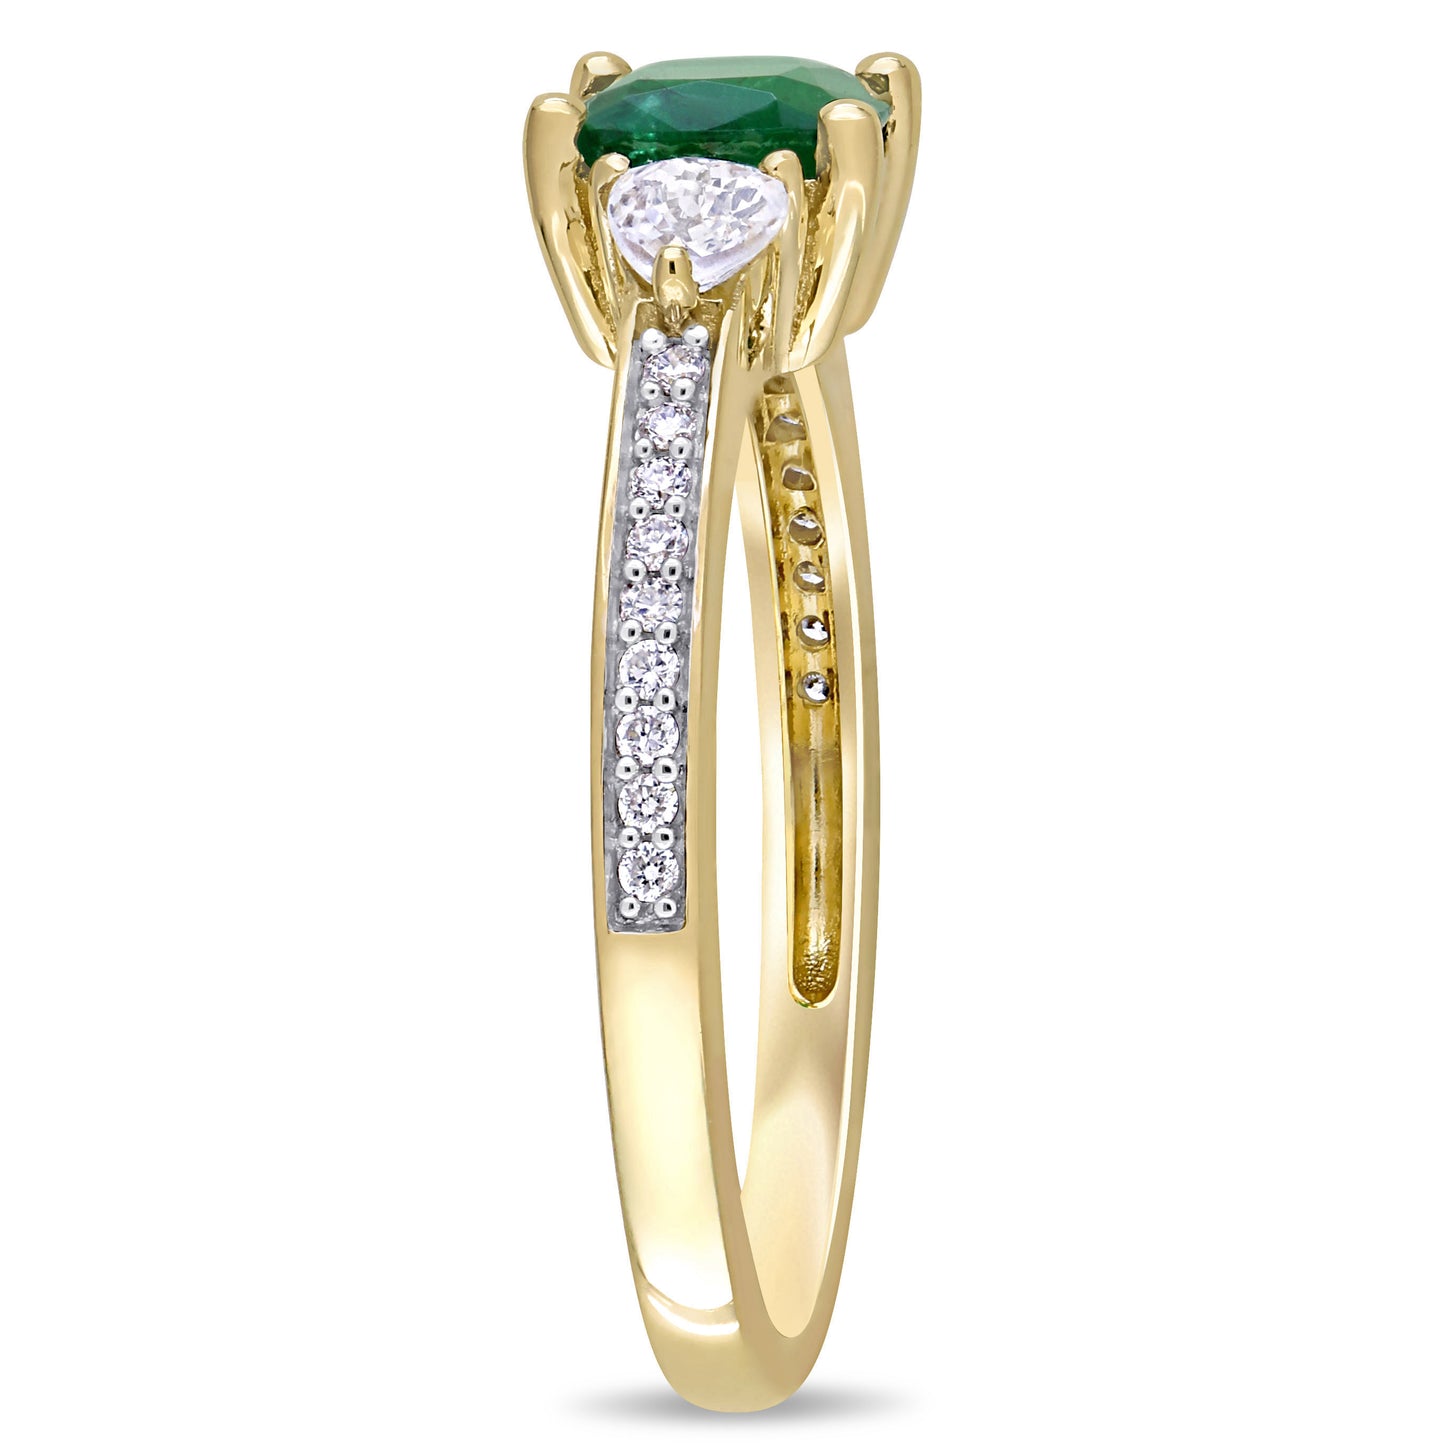 Emerald & White Sapphire & Diamond Ring in 14k Yellow Gold